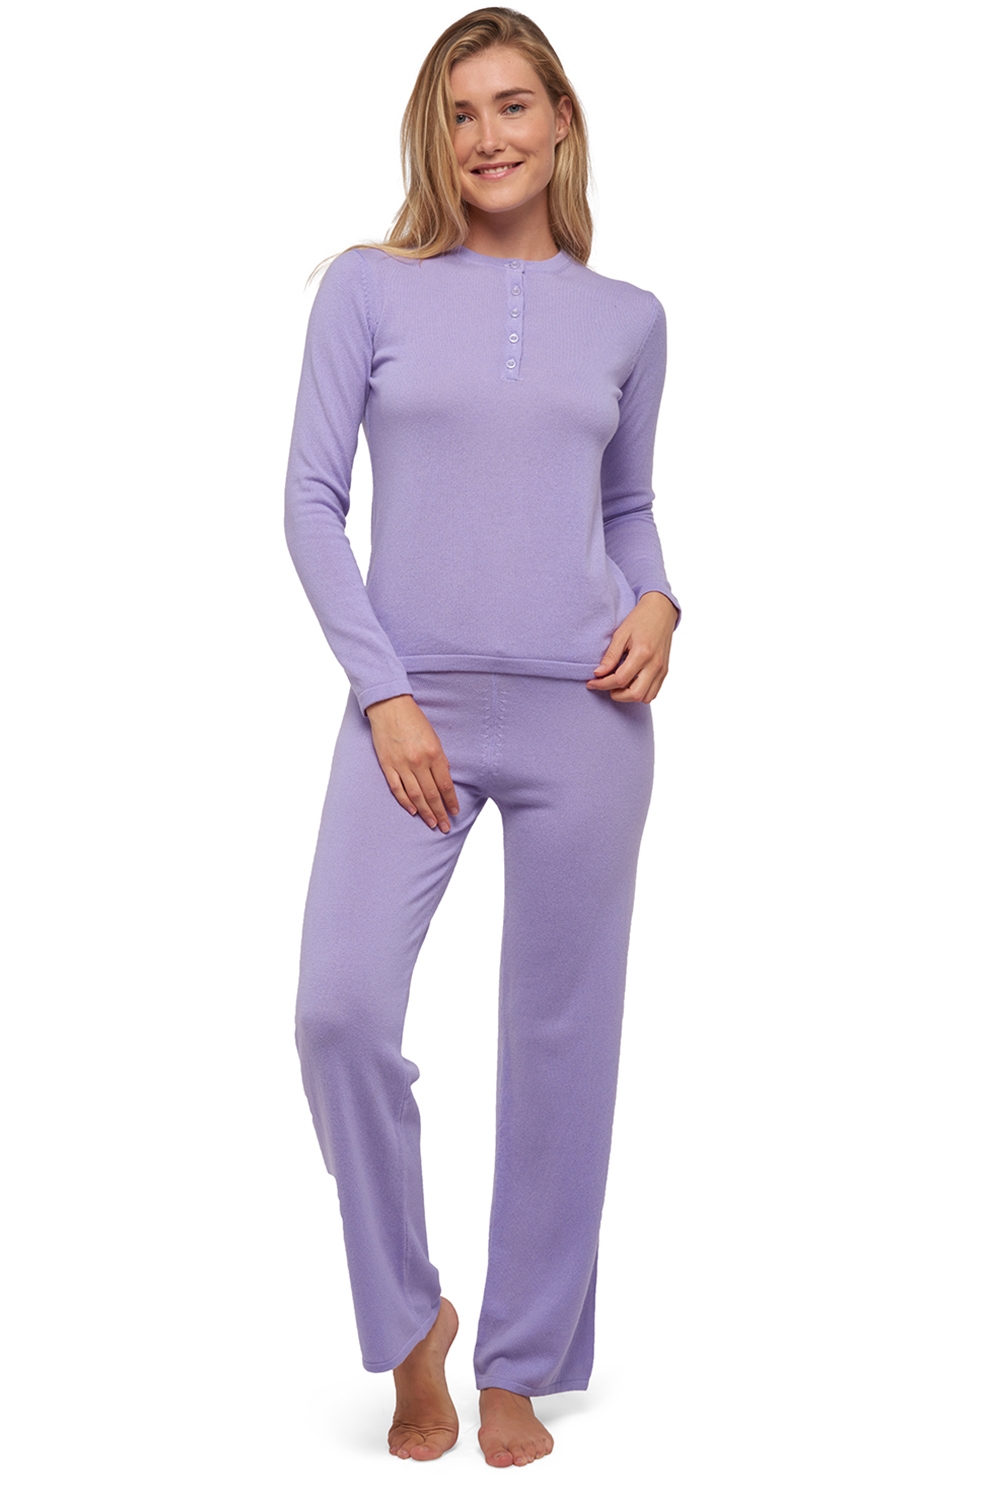 Cashmere ladies pyjamas loan violet tulip xl